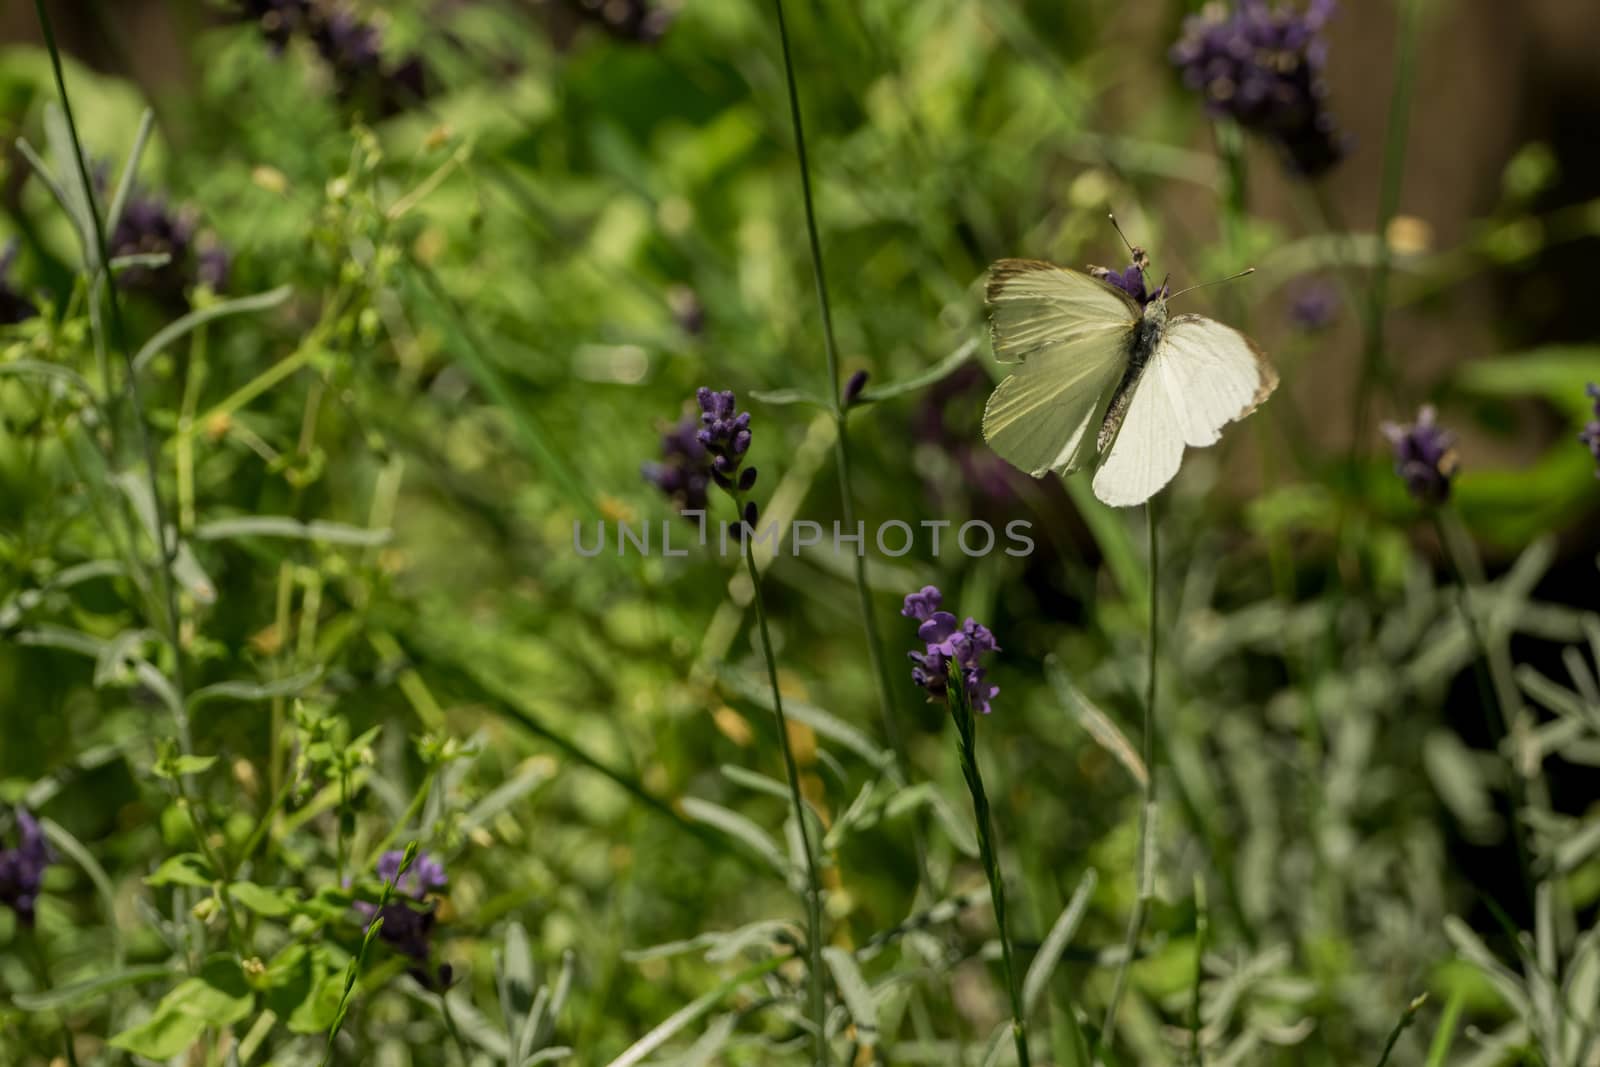 A beautiful butterfly in the wild garden